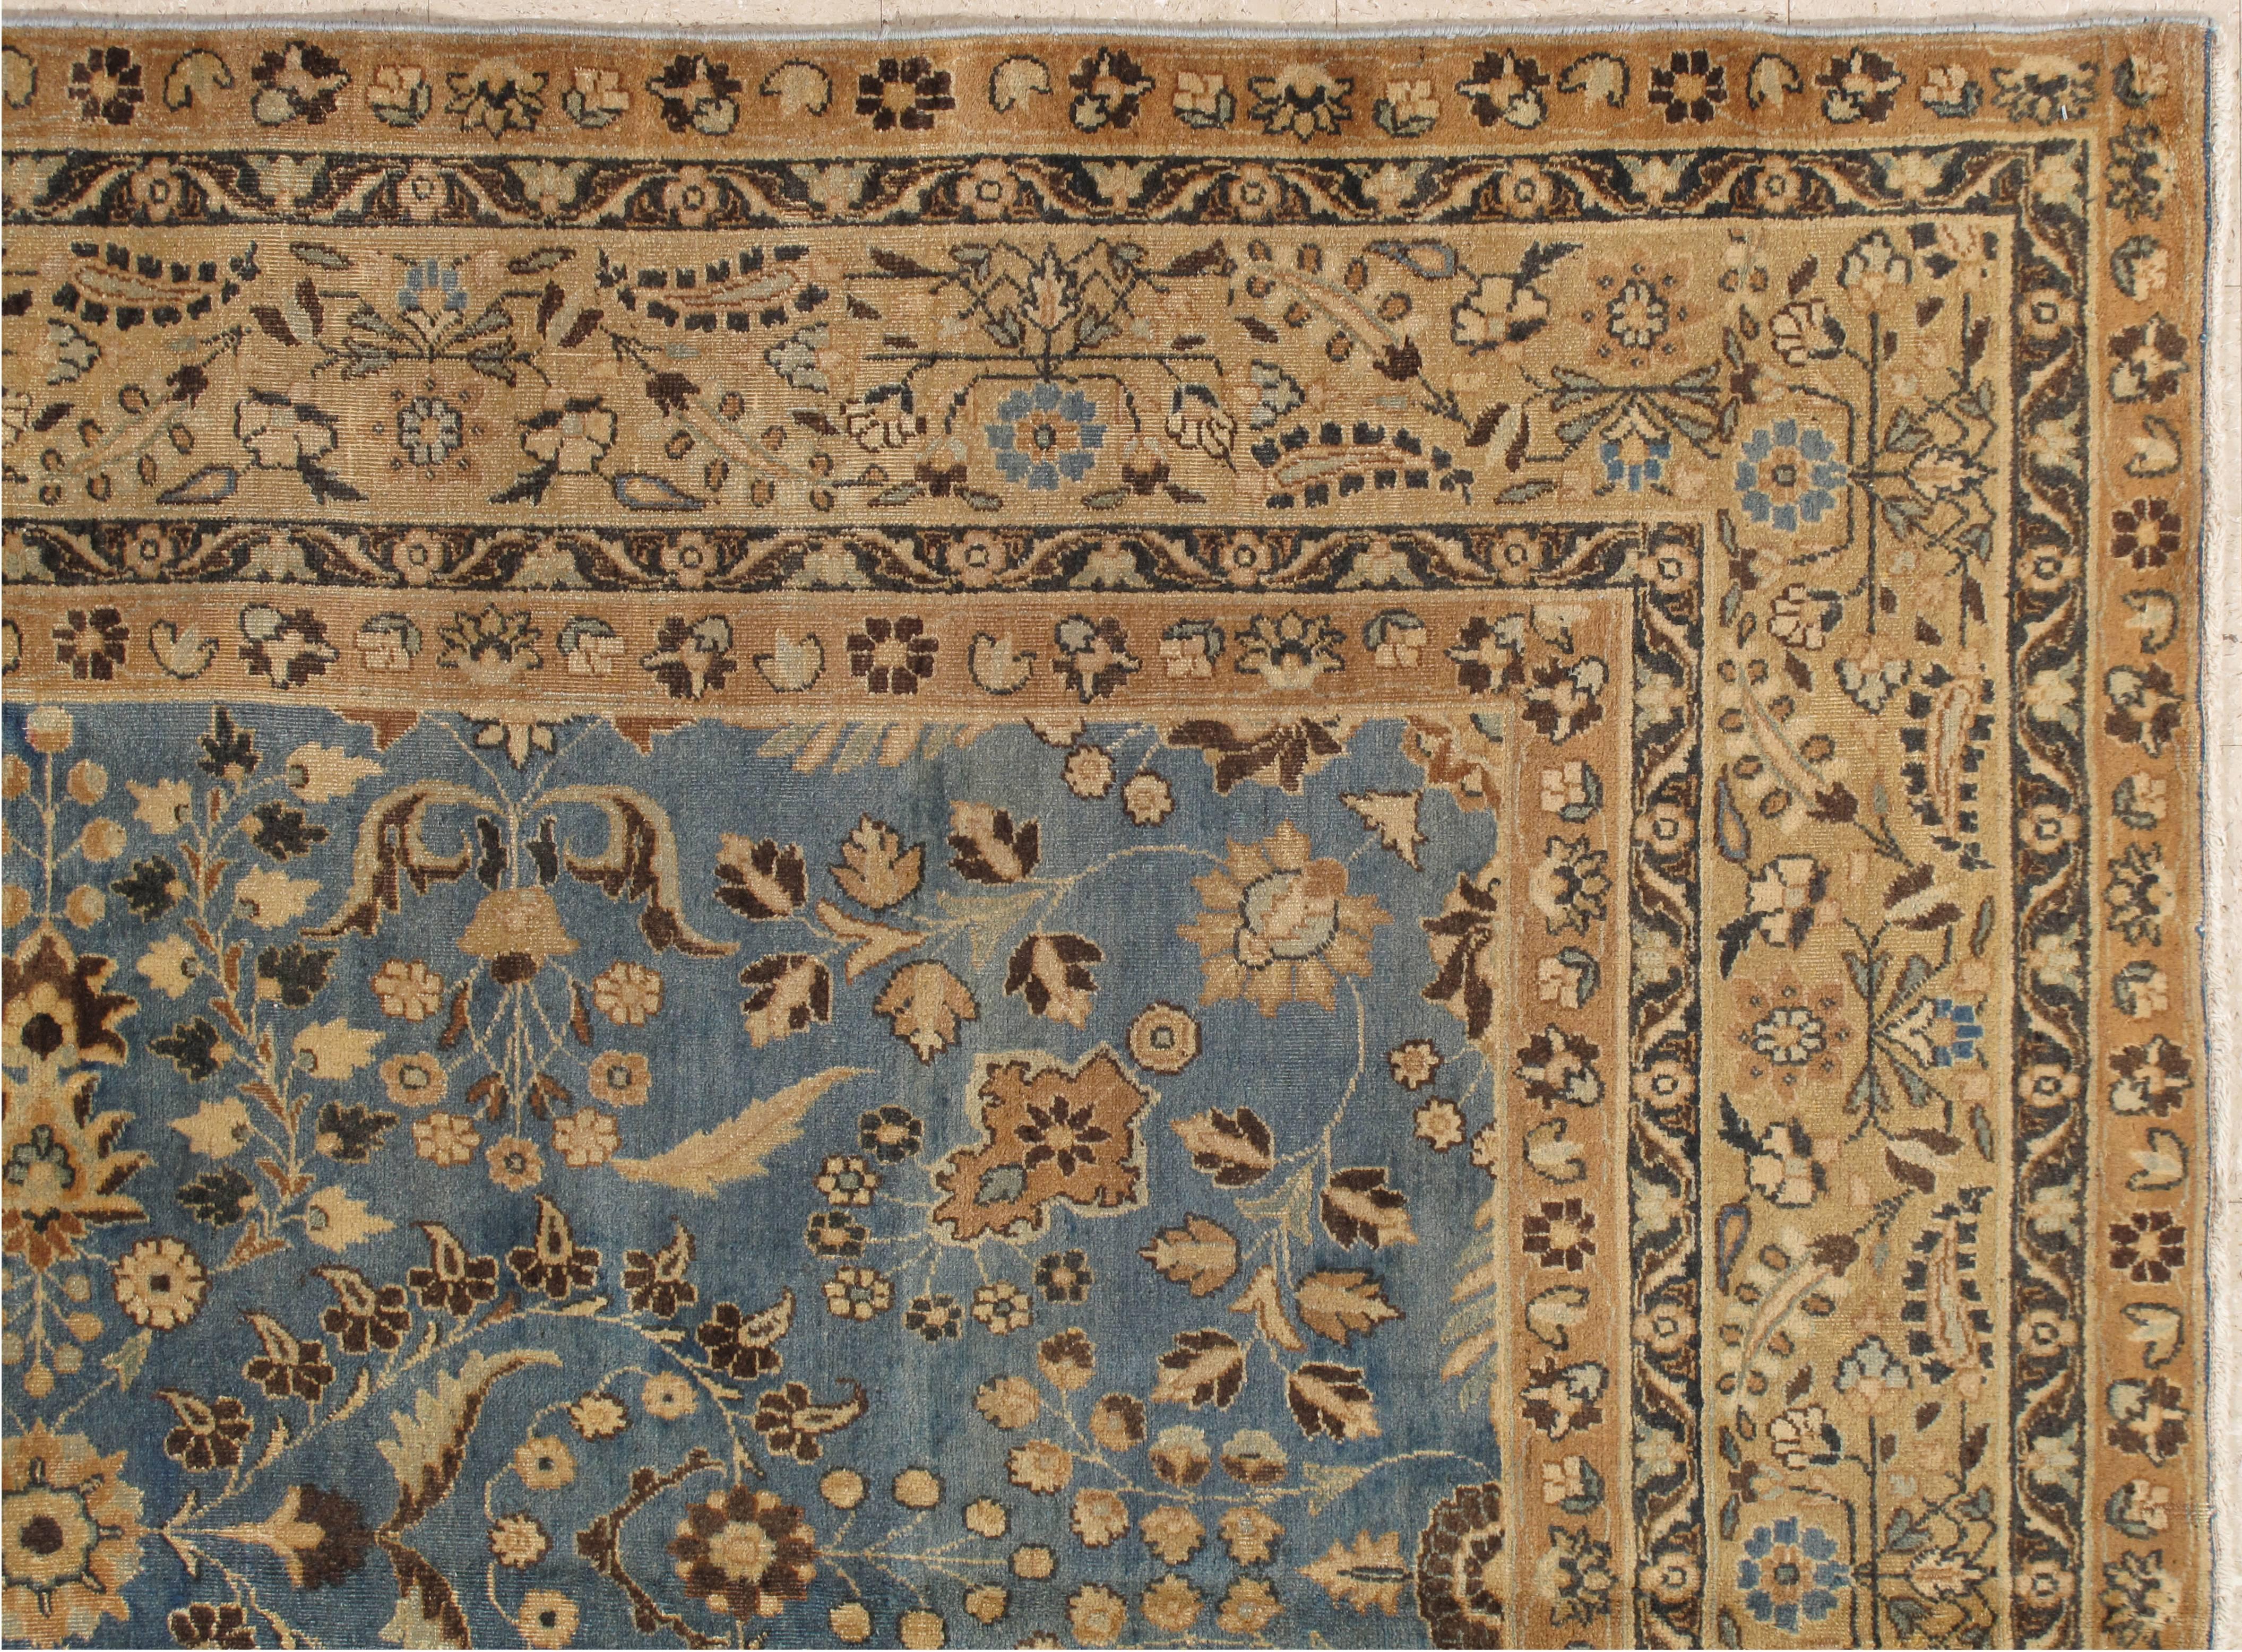 Antique Khorassan Carpet, 20th Century Persian Handwoven Rug, Light Blue, Beige For Sale 1